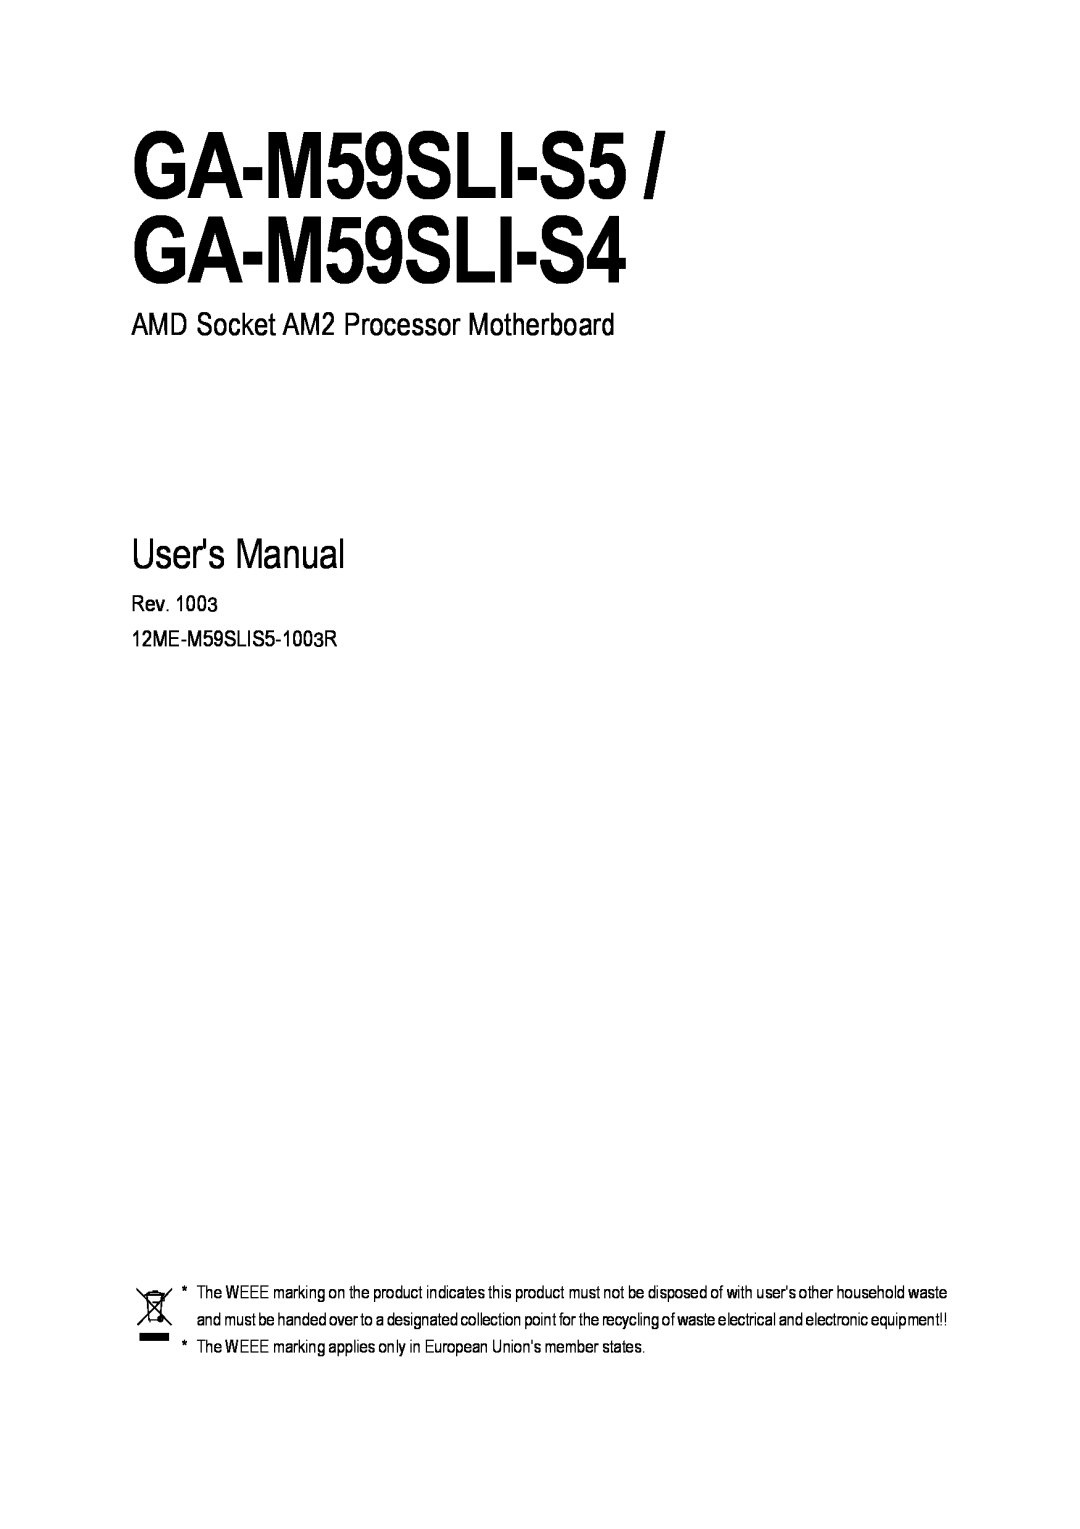 Gigabyte user manual GA-M59SLI-S5 / GA-M59SLI-S4, Users Manual, AMD Socket AM2 Processor Motherboard 